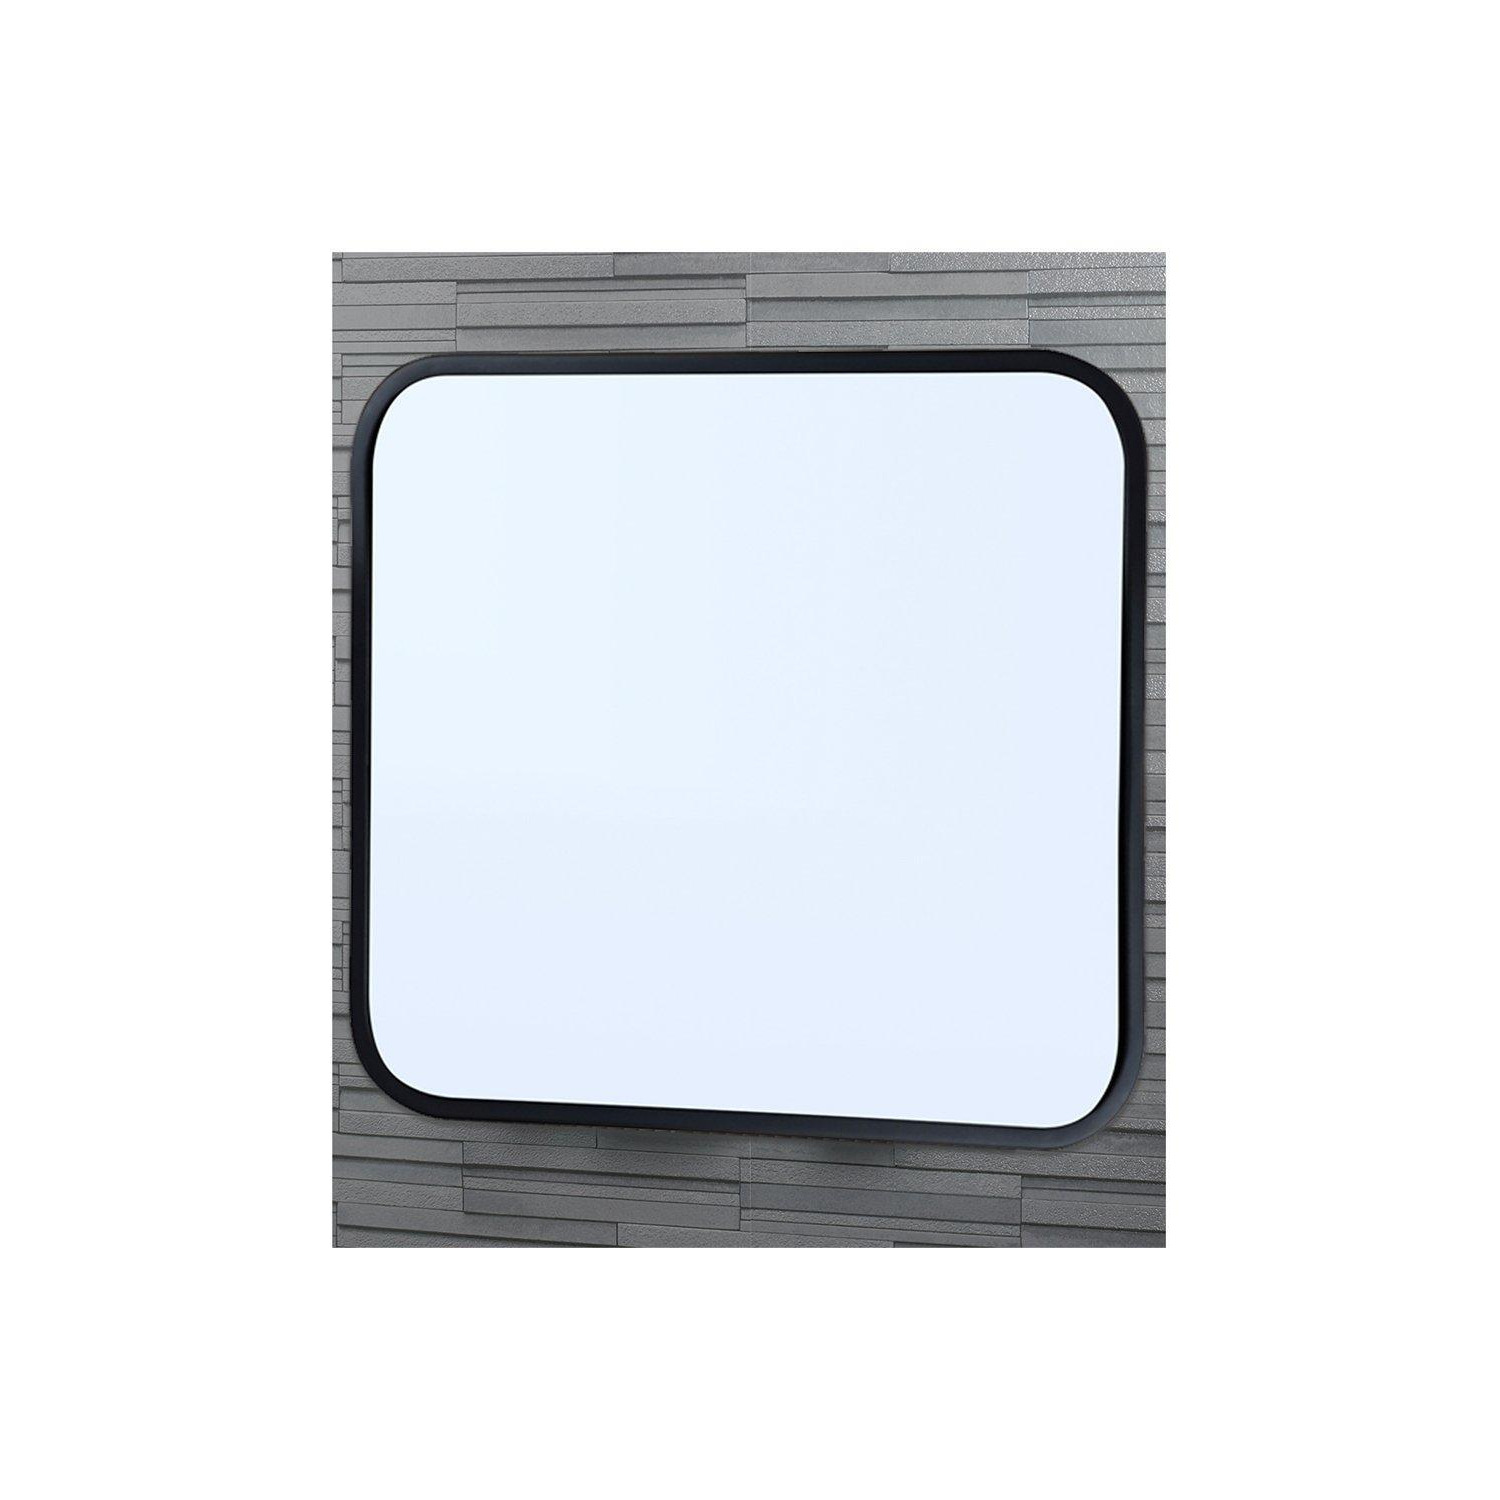 'Shoreditch' Square Black Metal Framed Mirror 40cmx40cm - image 1